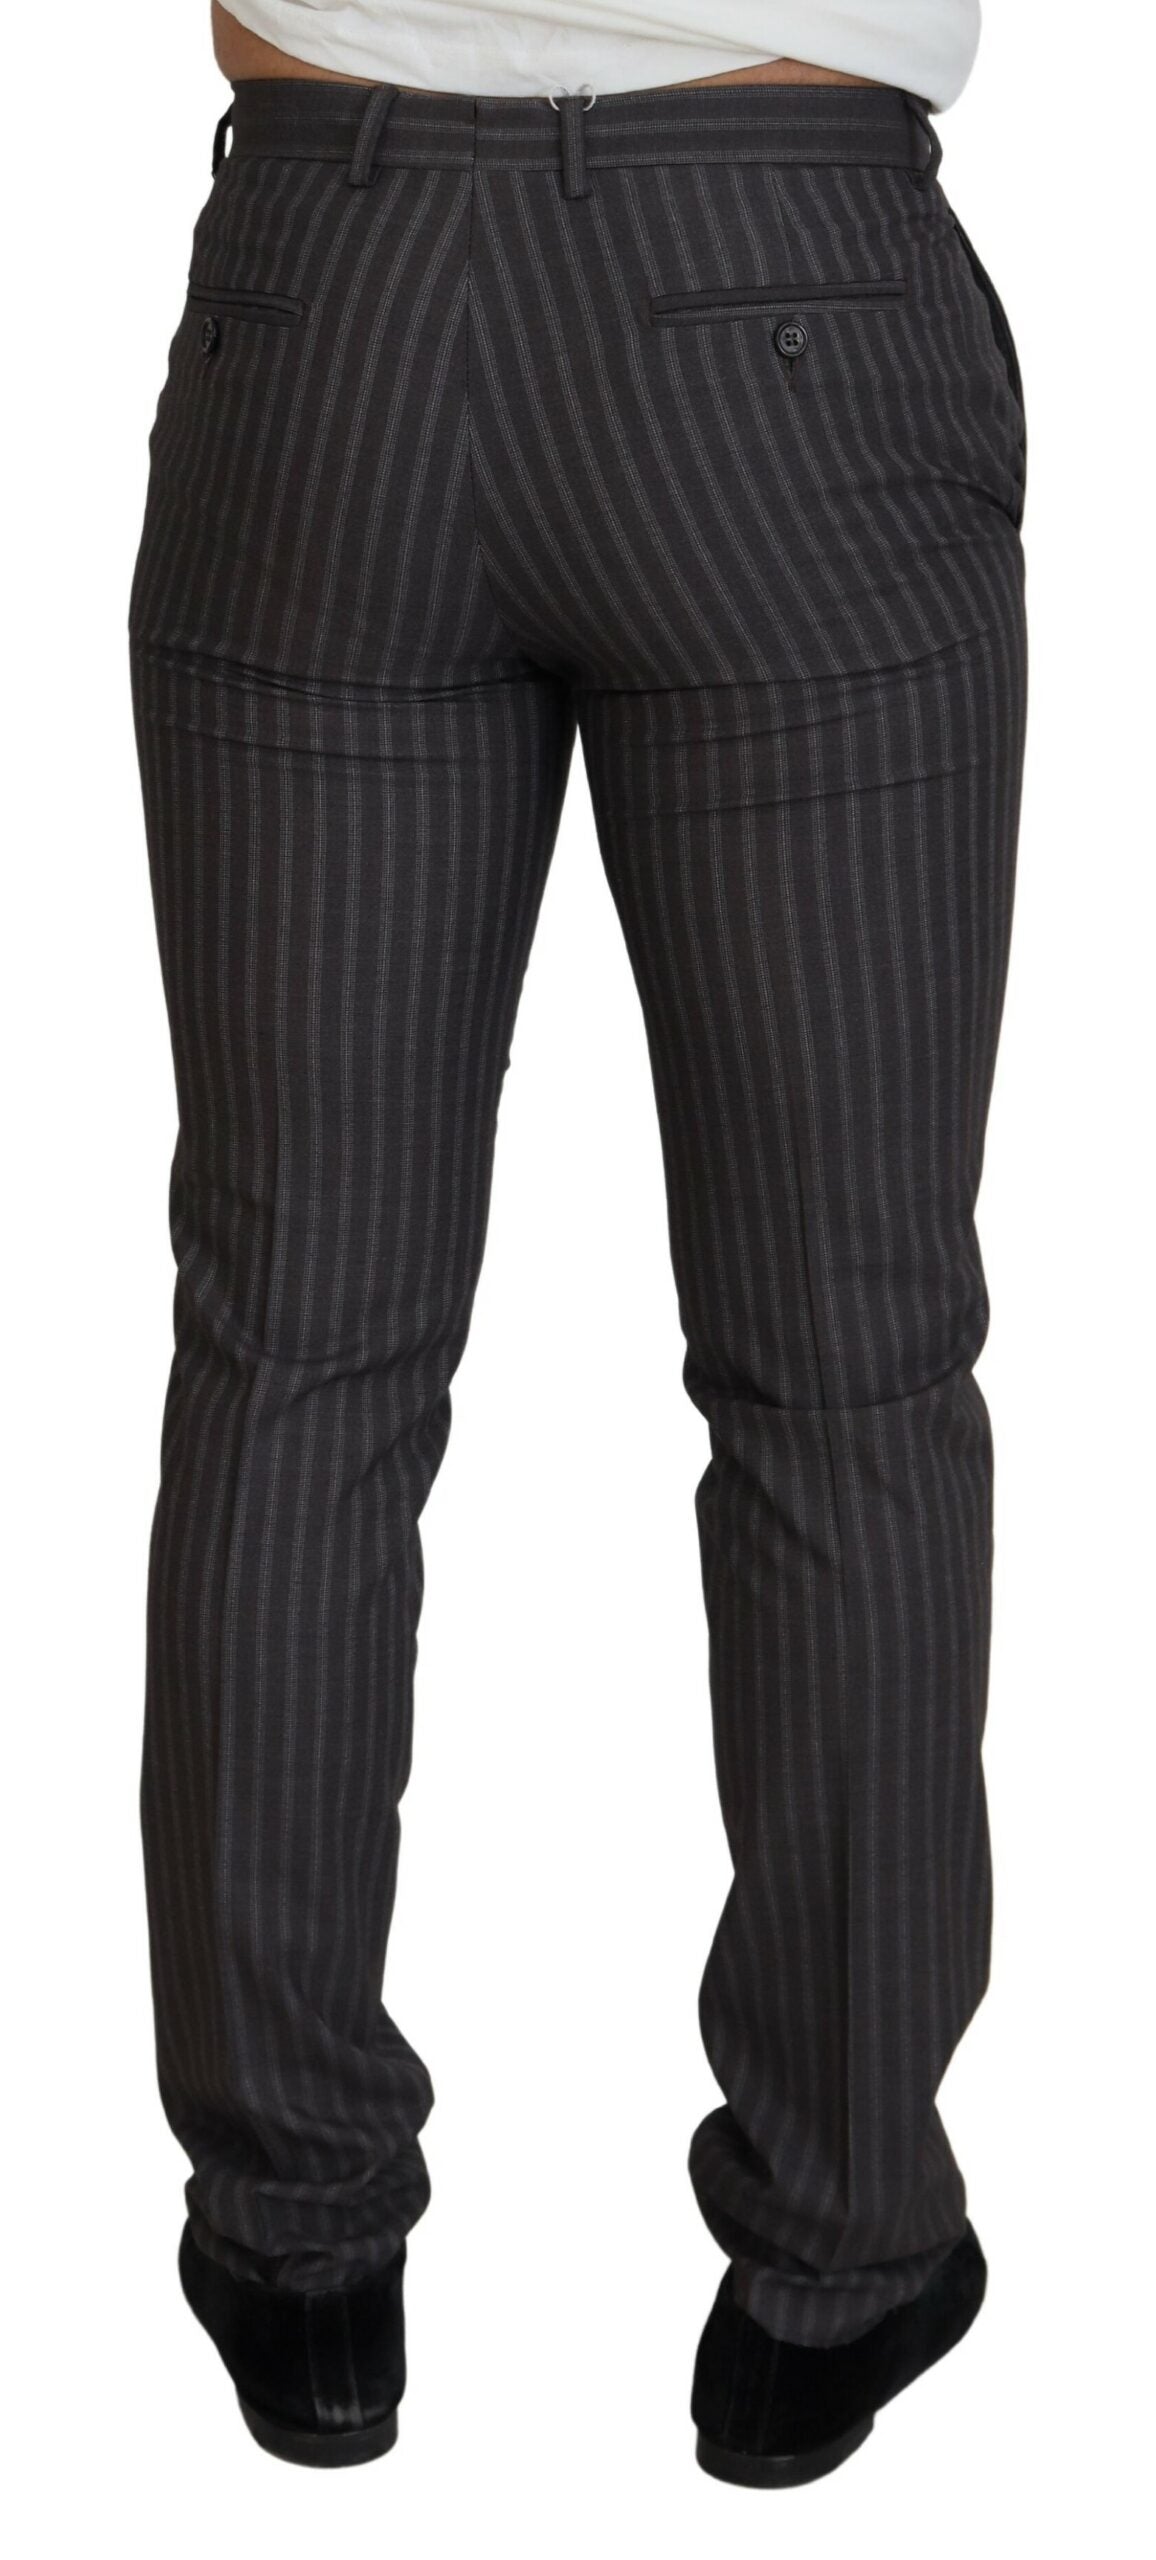 Elegant Striped Dress Pants for Men